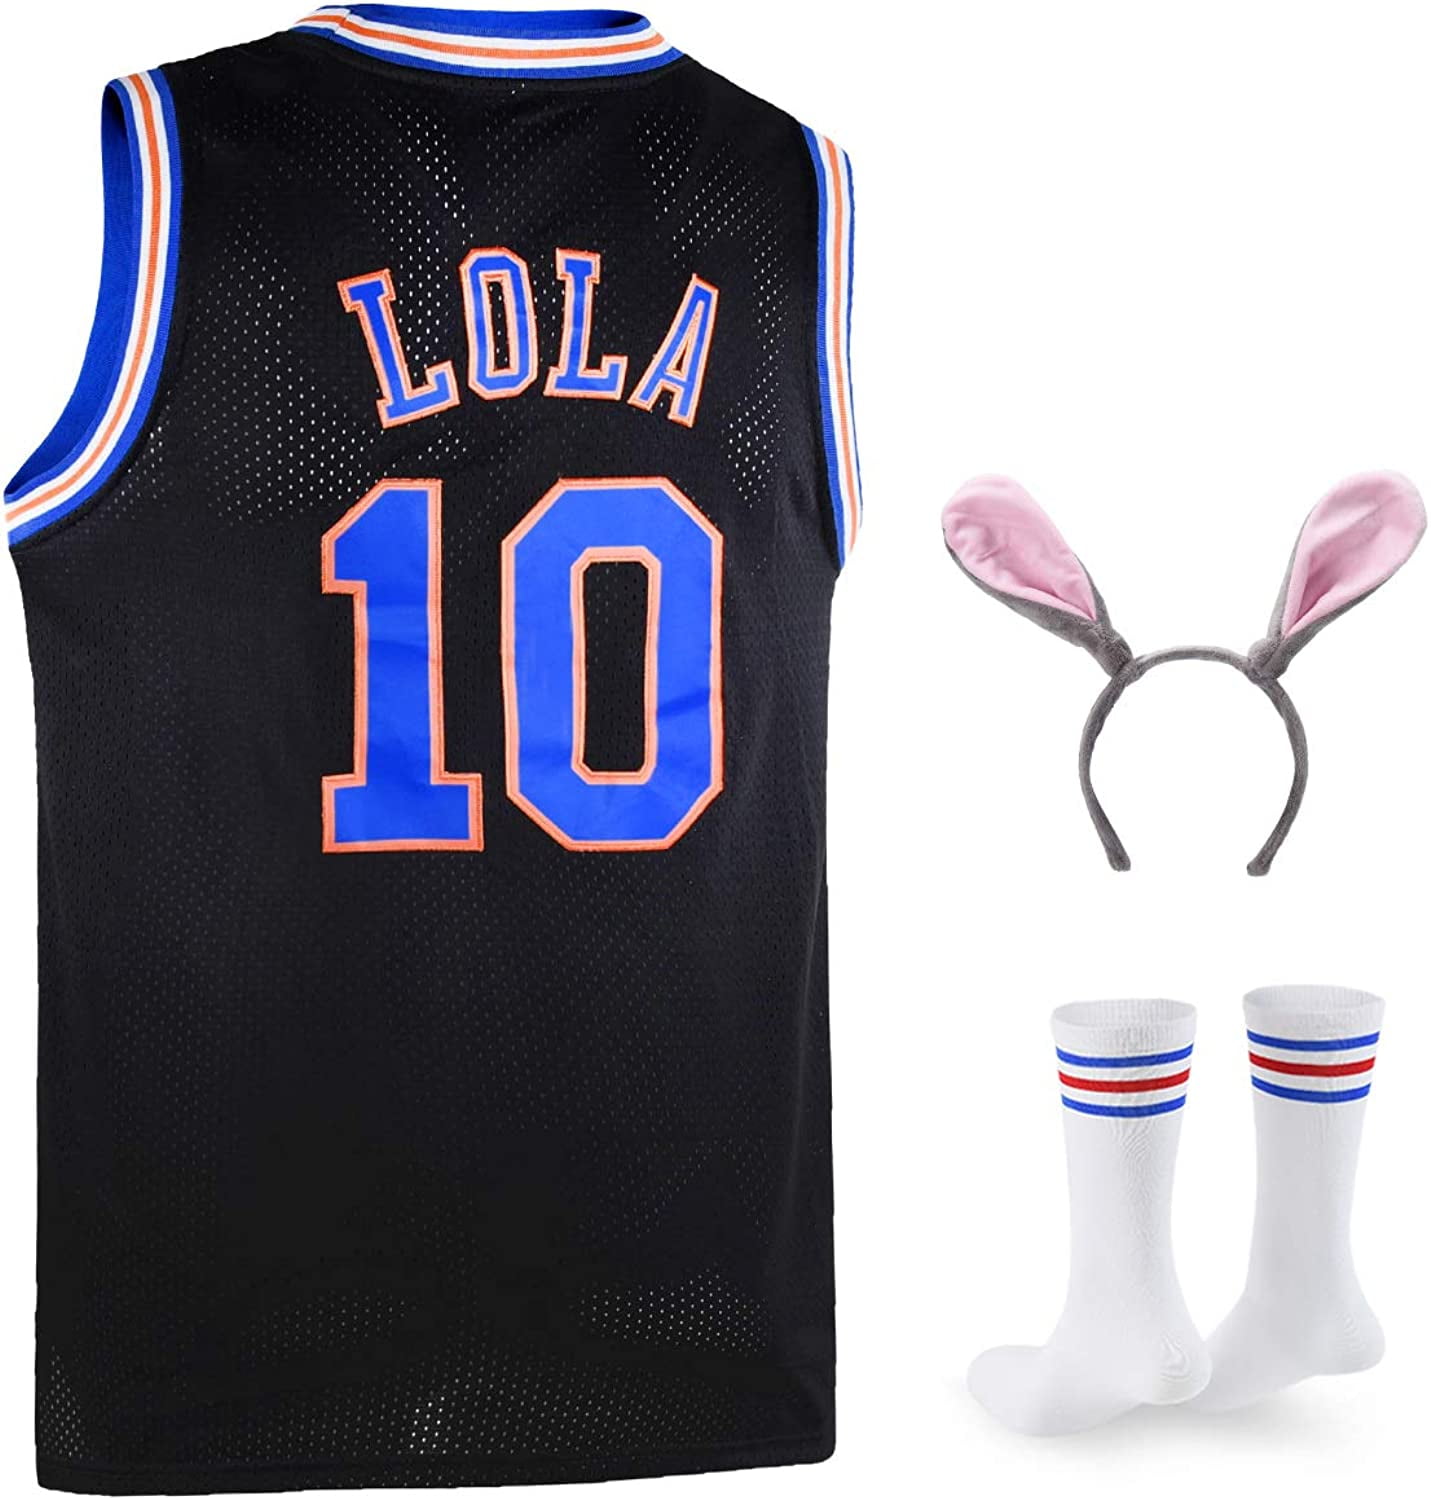 Oknown Lola #10 Space Mens Movie Jersey Looney Basketball Jersey with Head Hoop & Socks S-XXL